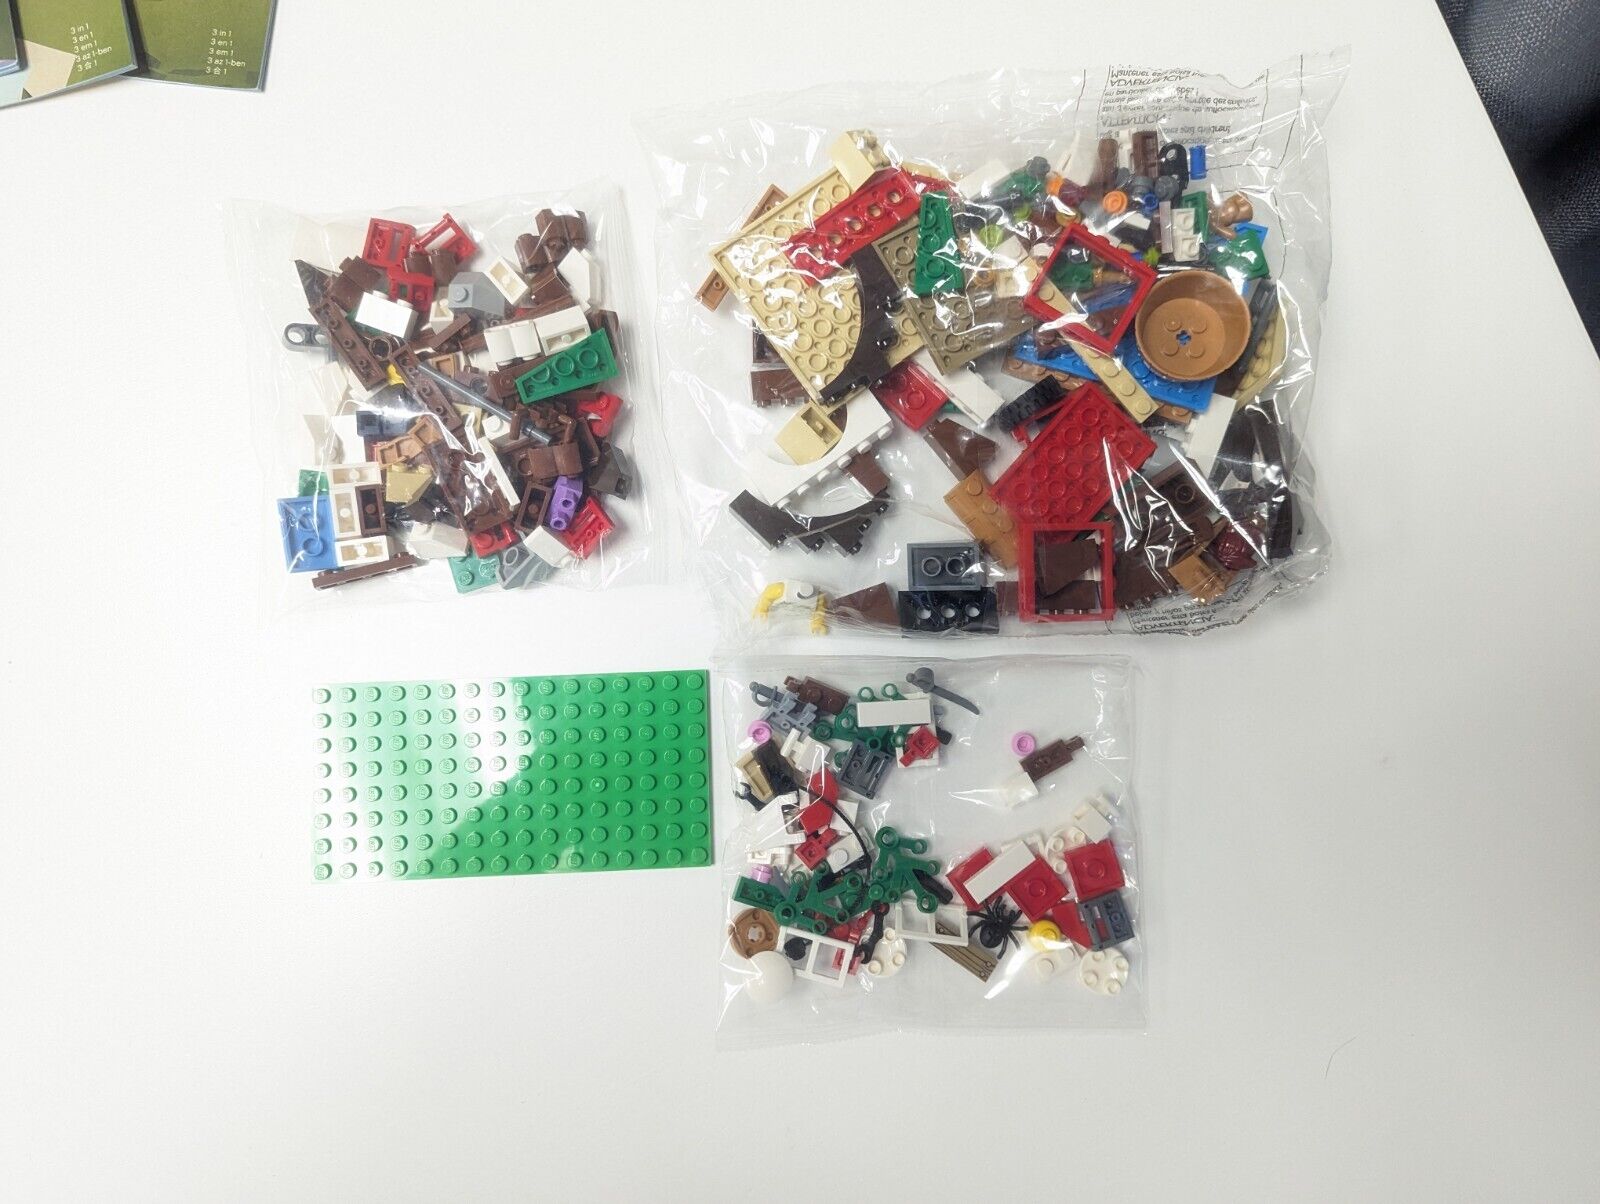 LEGO CREATOR: Treehouse Treasures (31078) - New, Open Box - Complete!